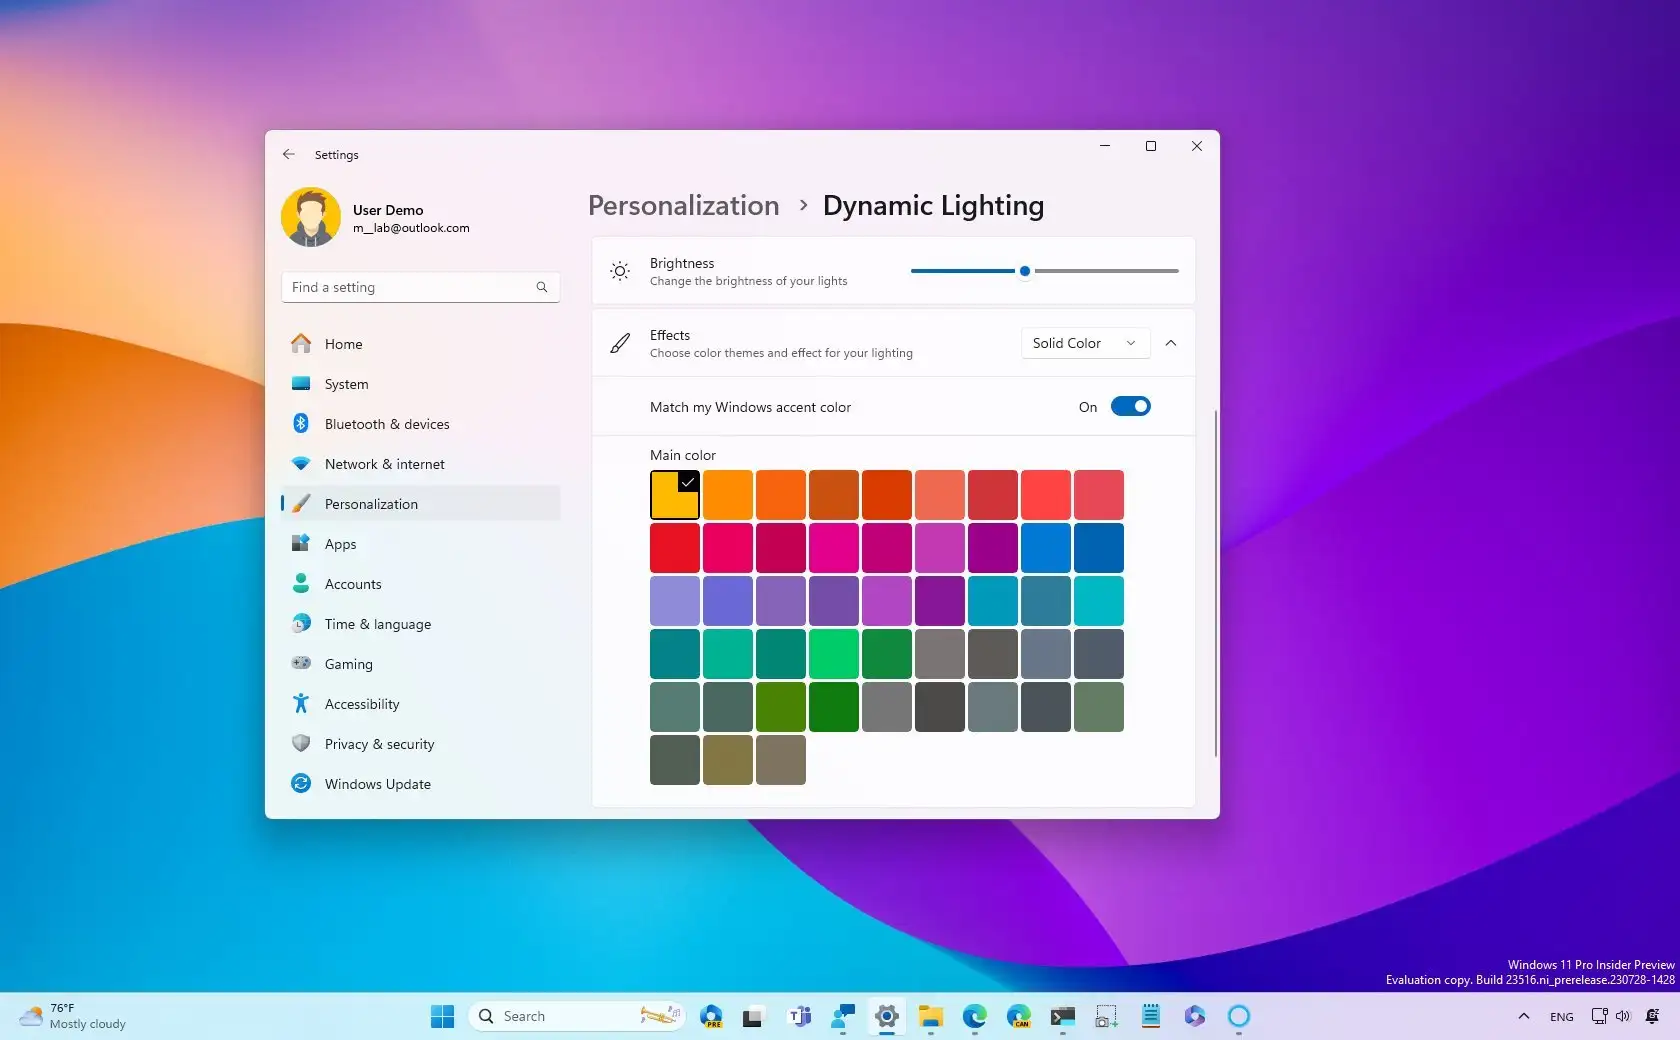 Windows 11 Dynamic Lighting